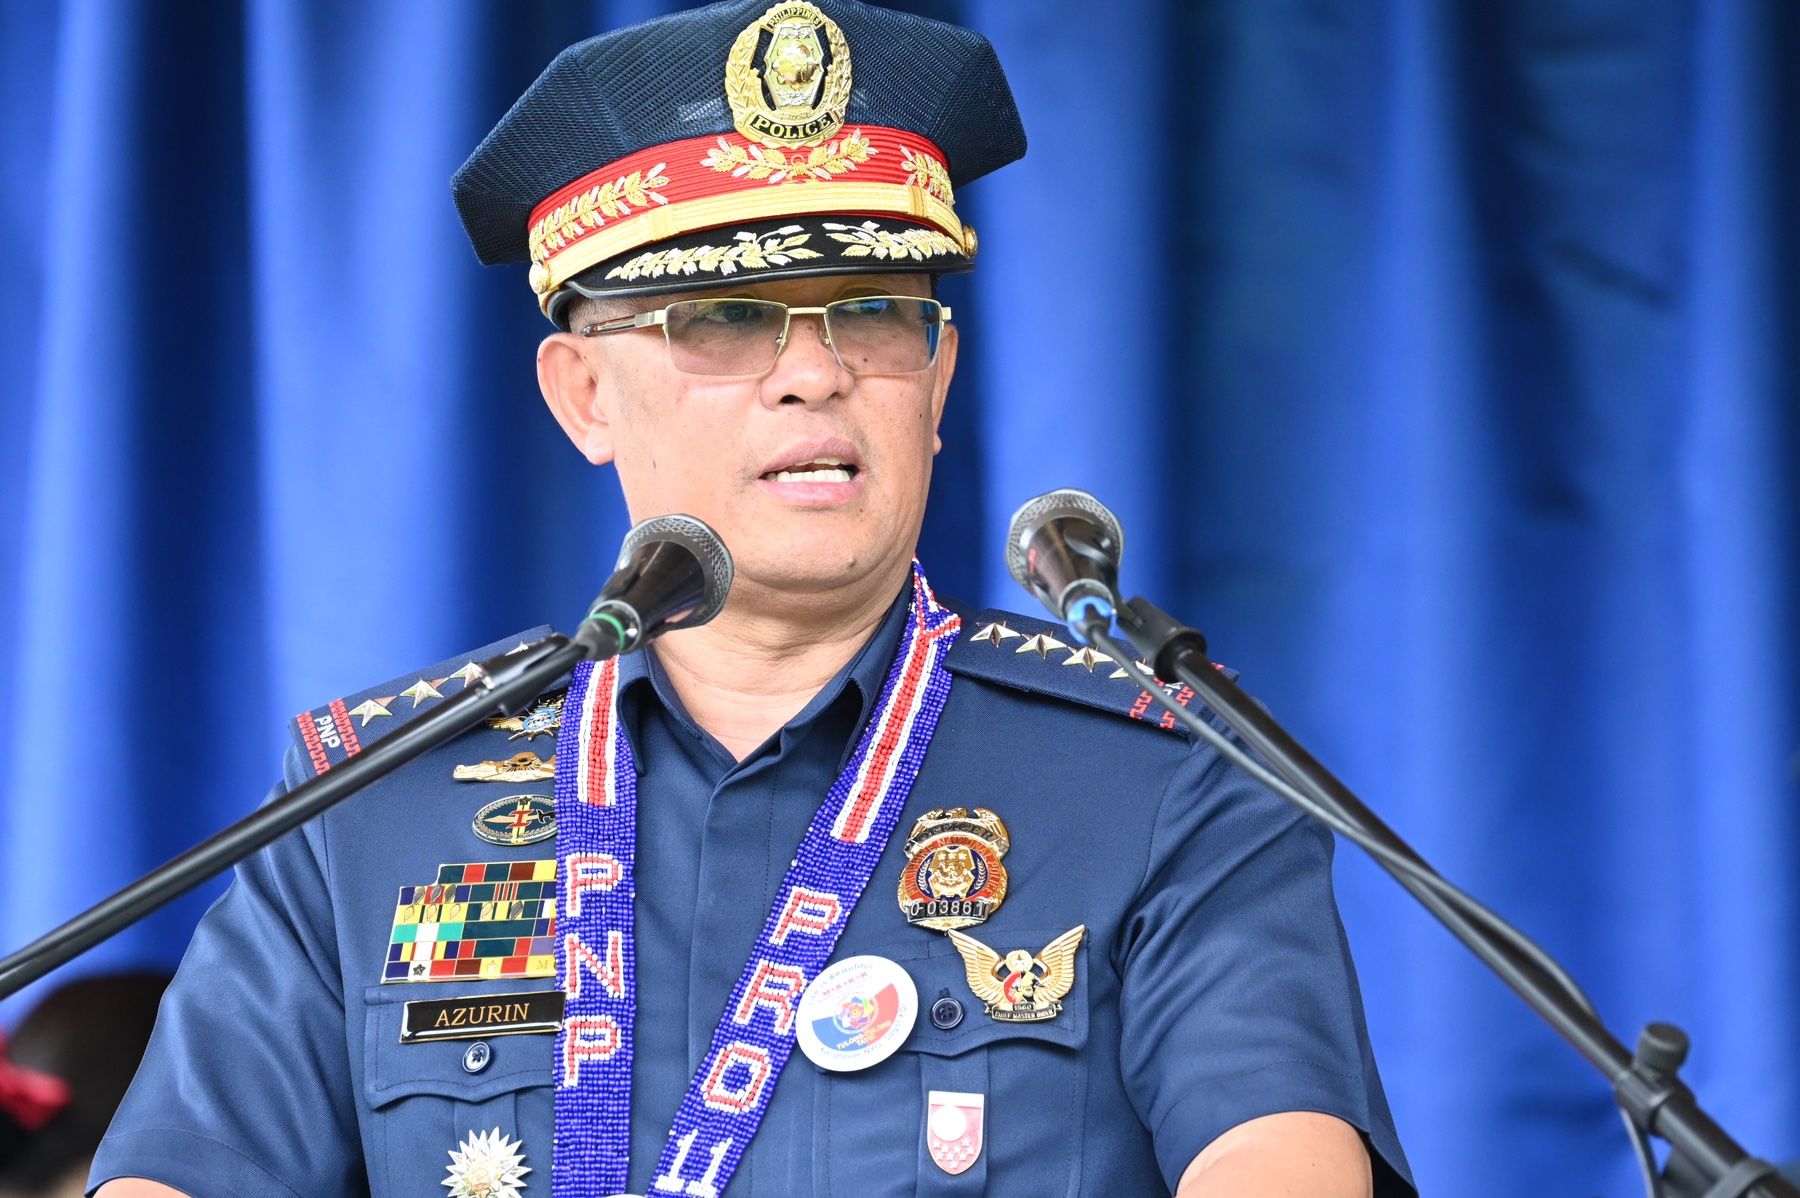 PNP Chief, Police General Rodolfo S Azurin Jr